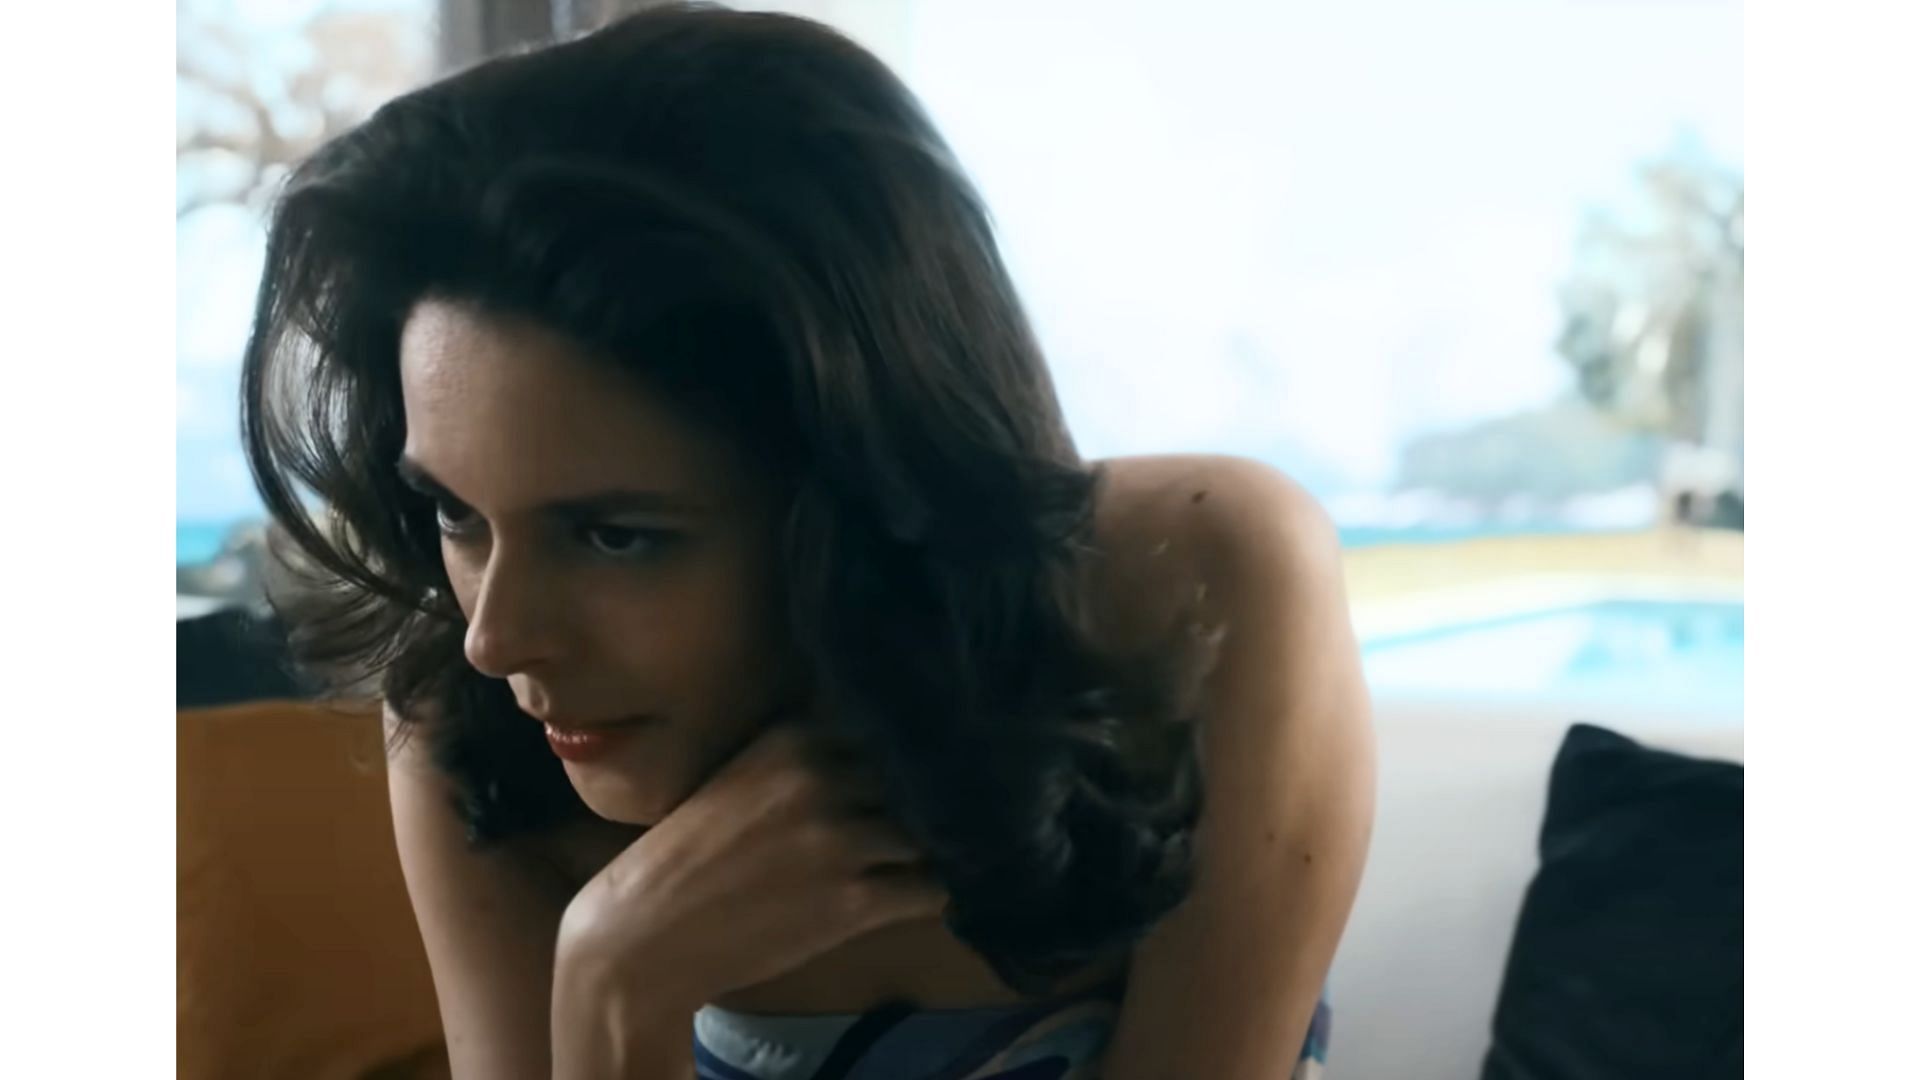 Julieth Restrepo playing Marta Ochoa in the series (Image via Netflix)